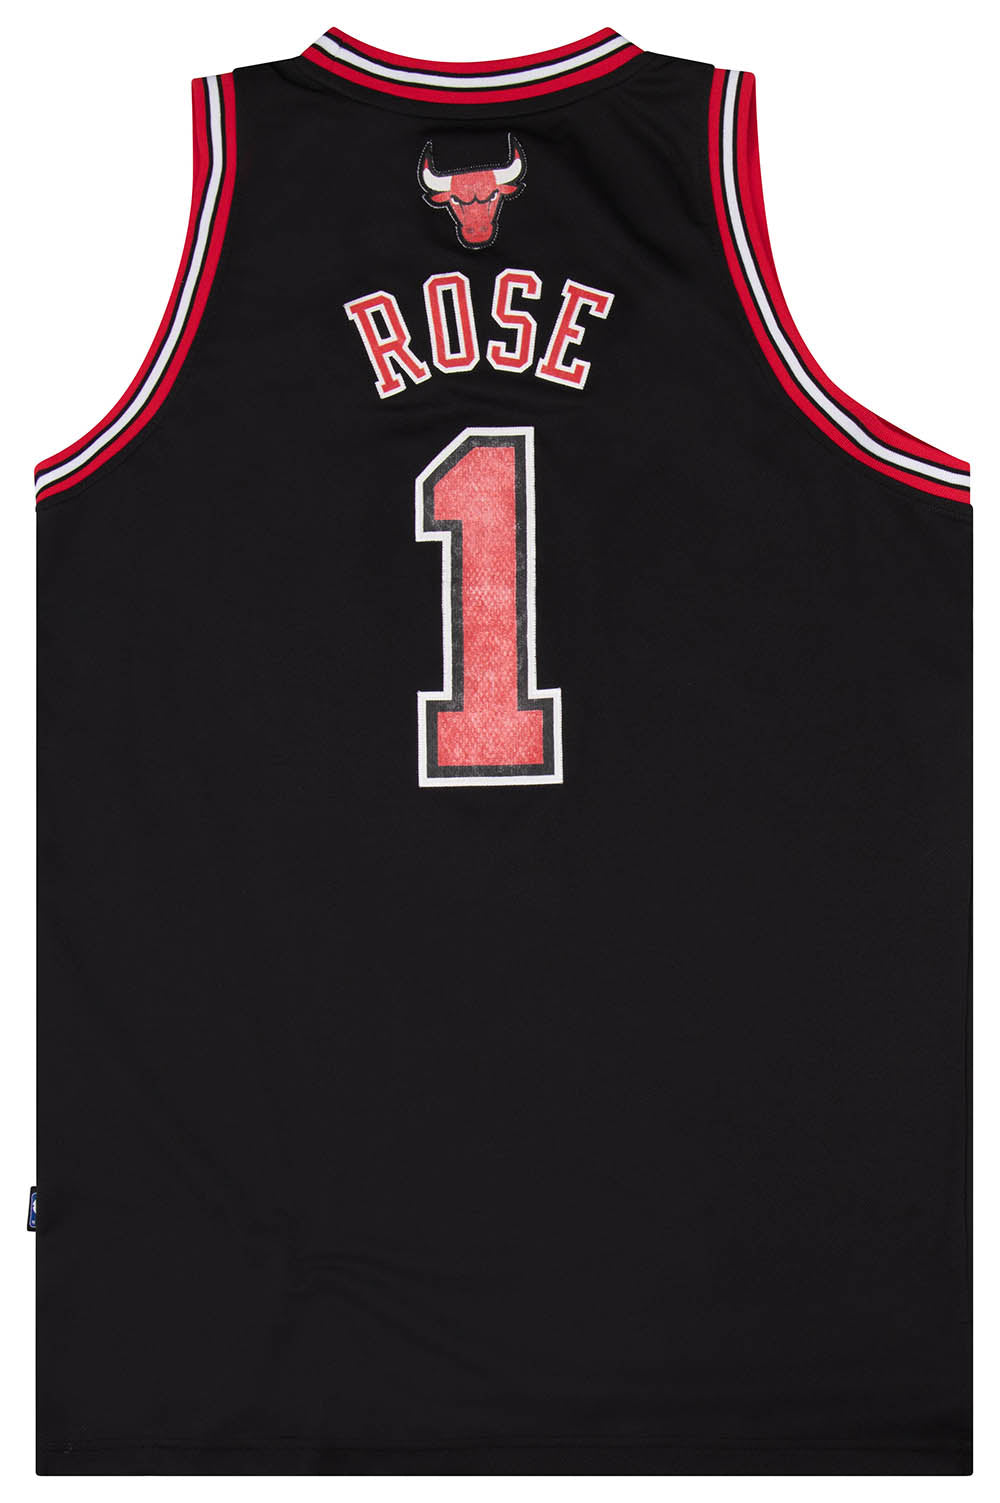 Chicago Bulls Derrick Rose #1 Nba Great Player Throwback Black